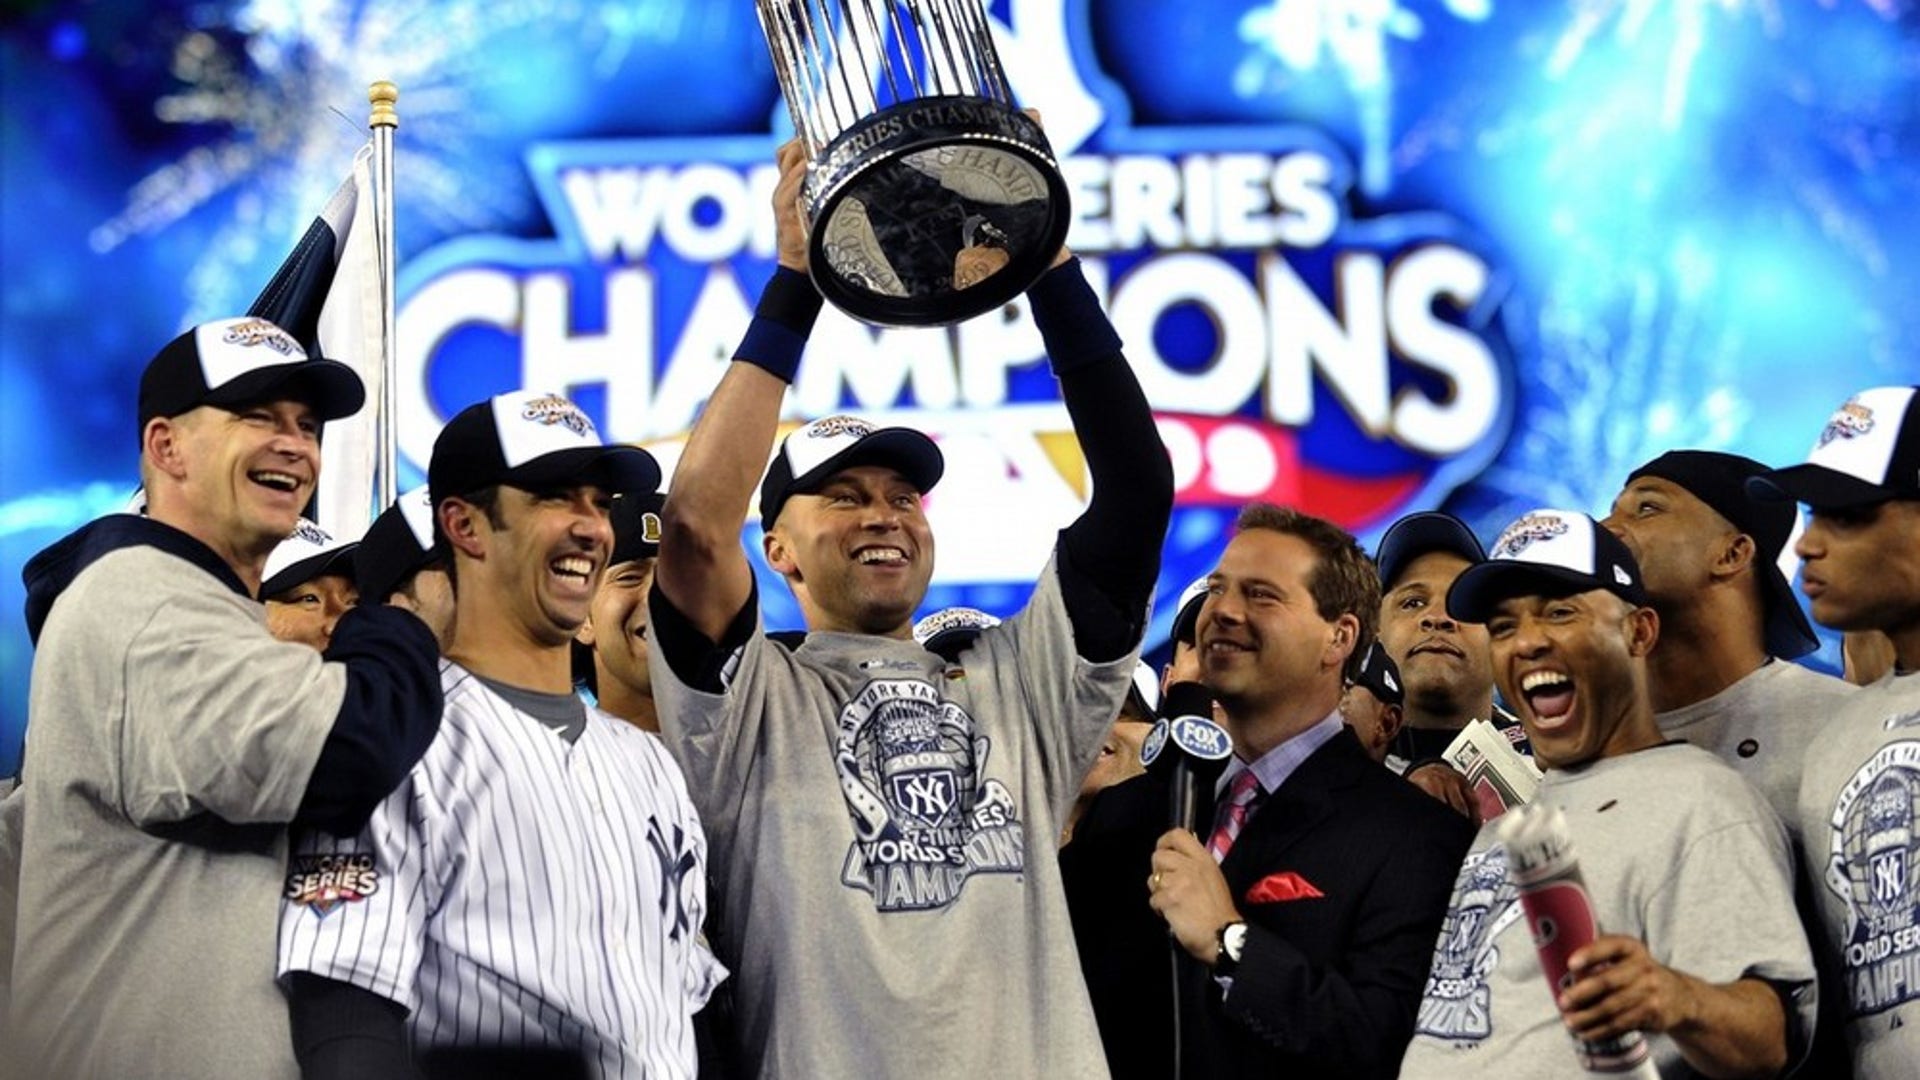 The 2009 World Series: Philadelphia Phillies vs. New York Yankees